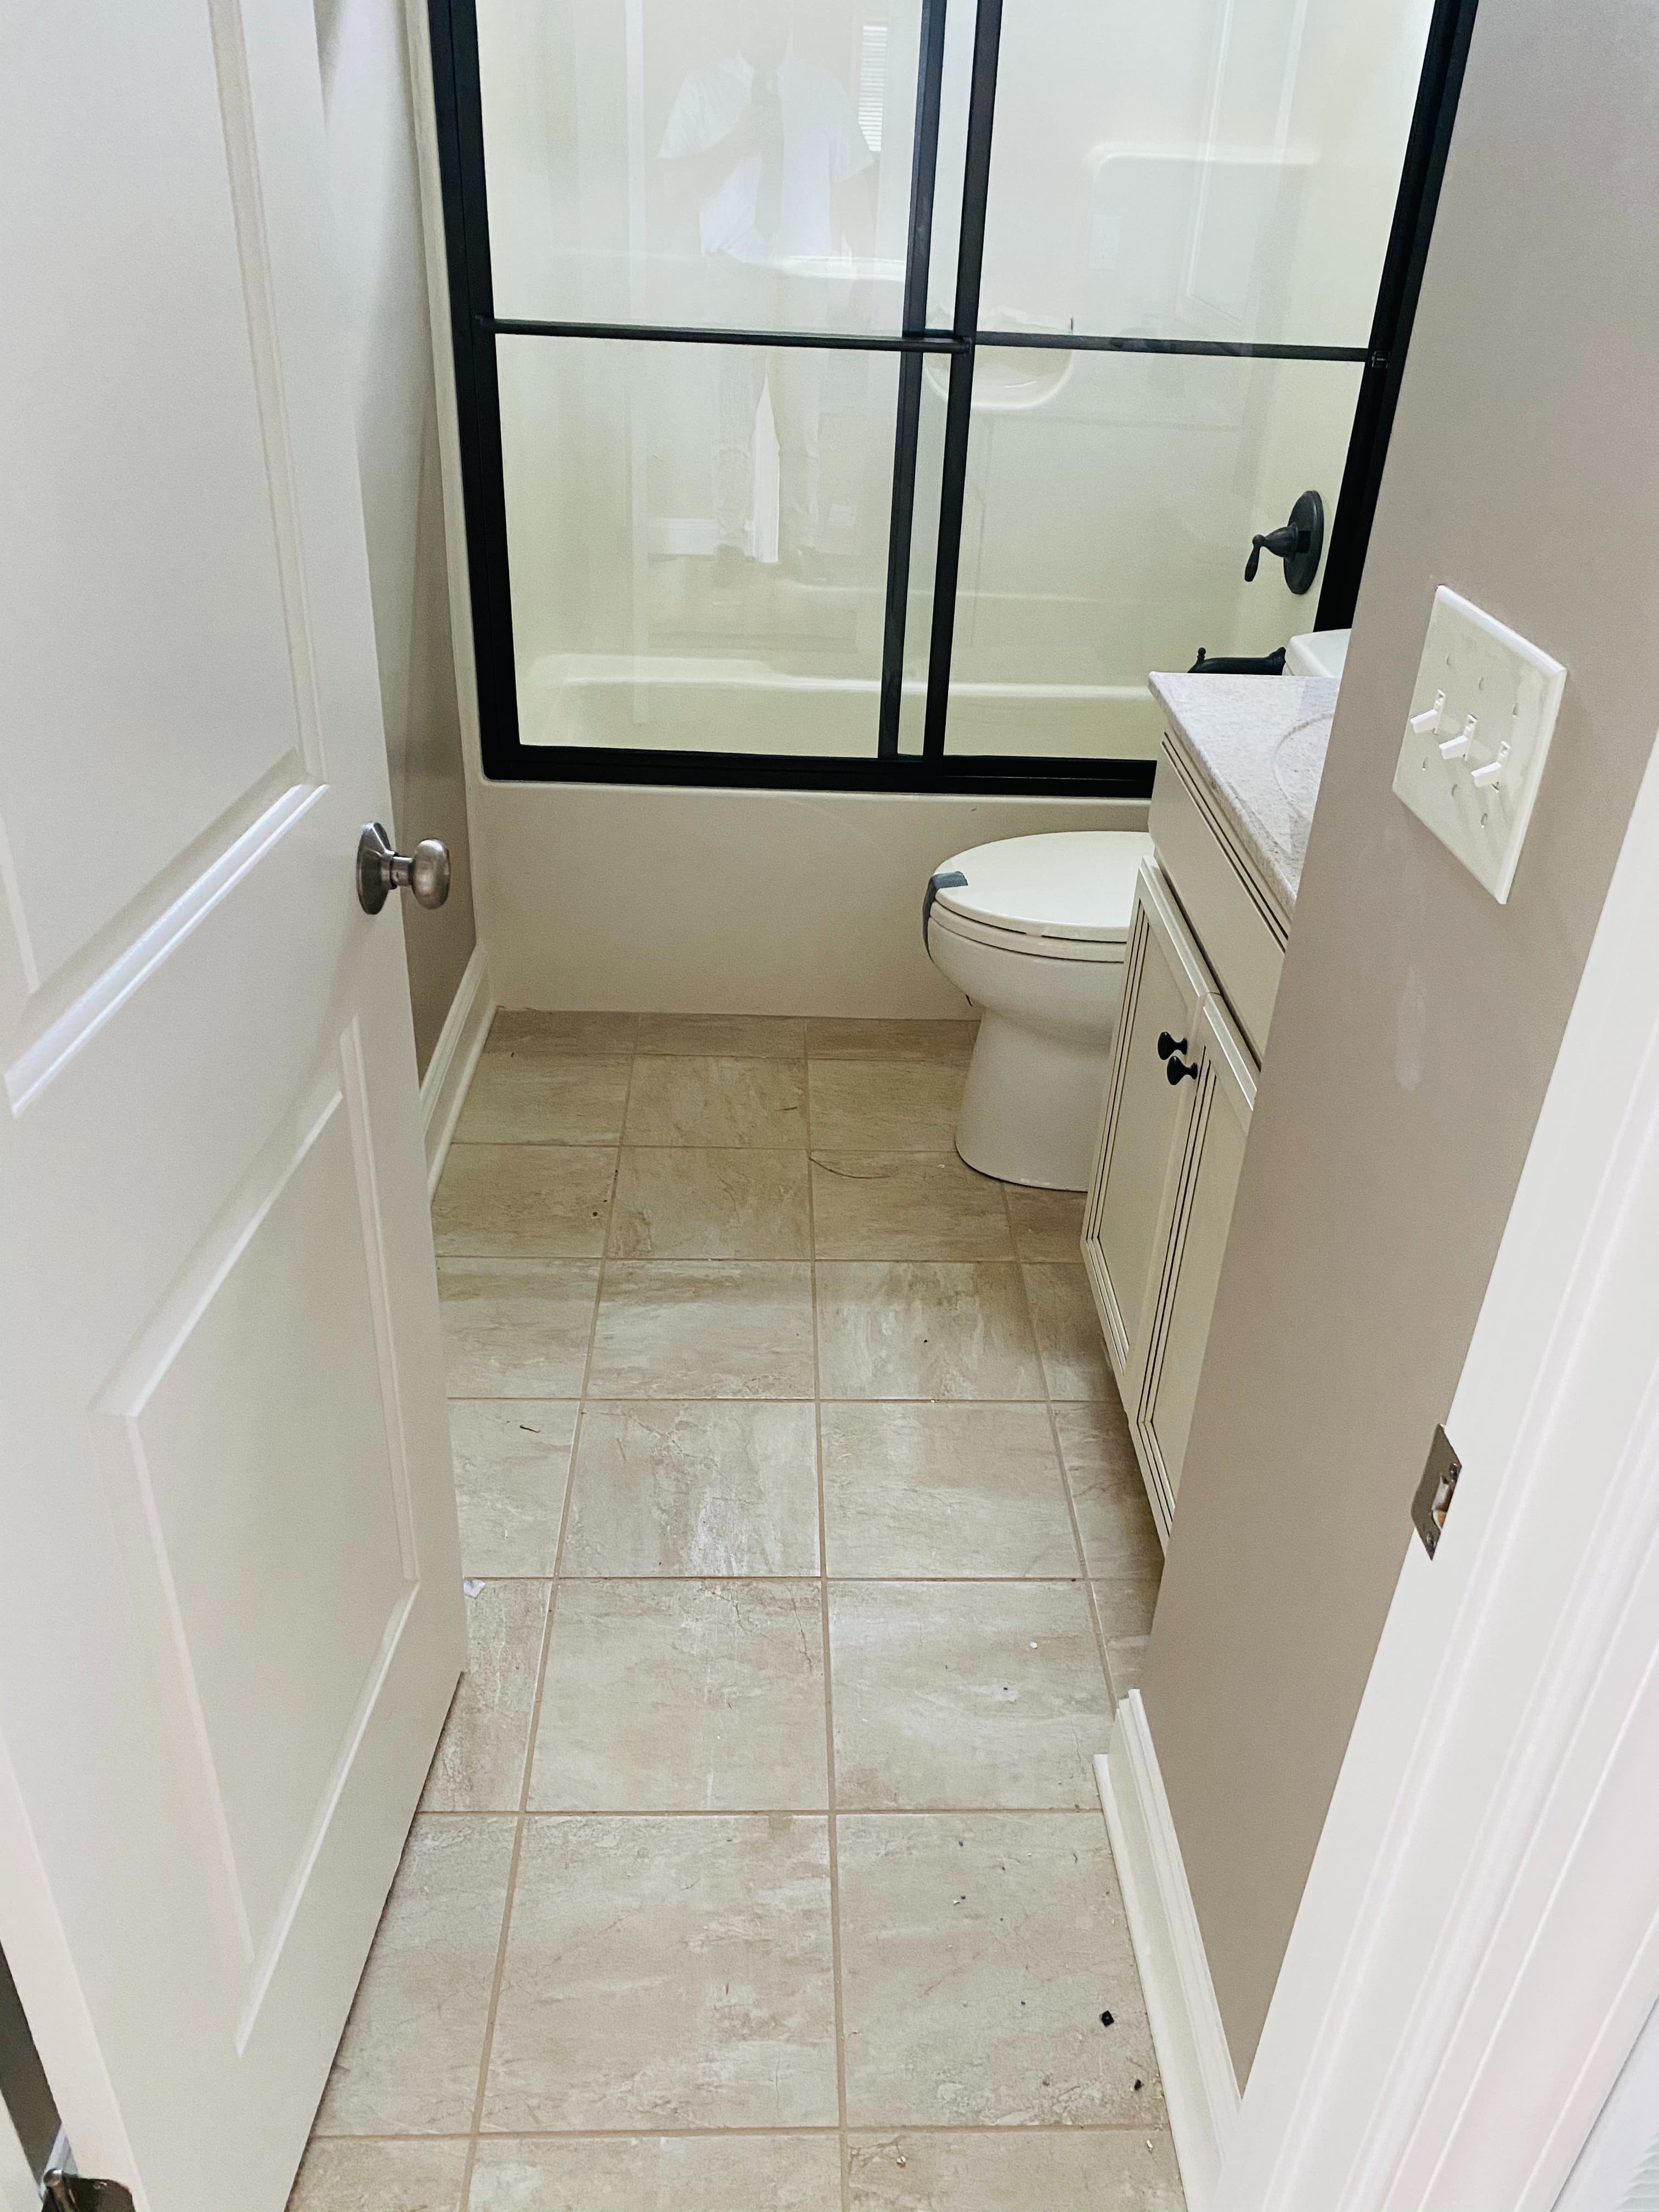 Bathroom tile | Carpetland USA of Virginia